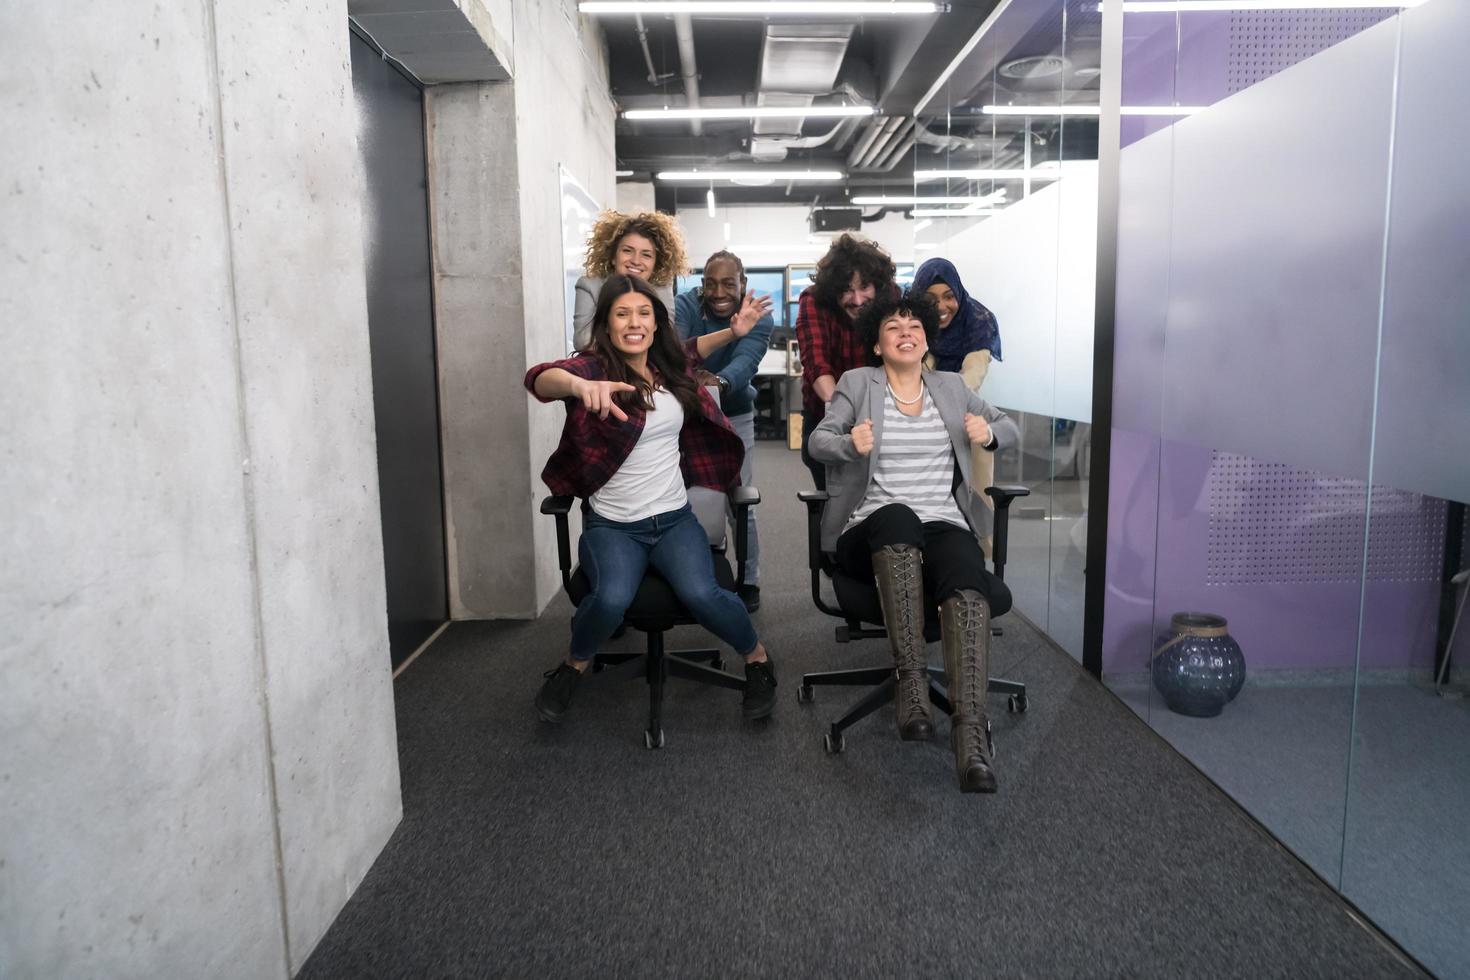 multiethnics business team racing on office chairs photo